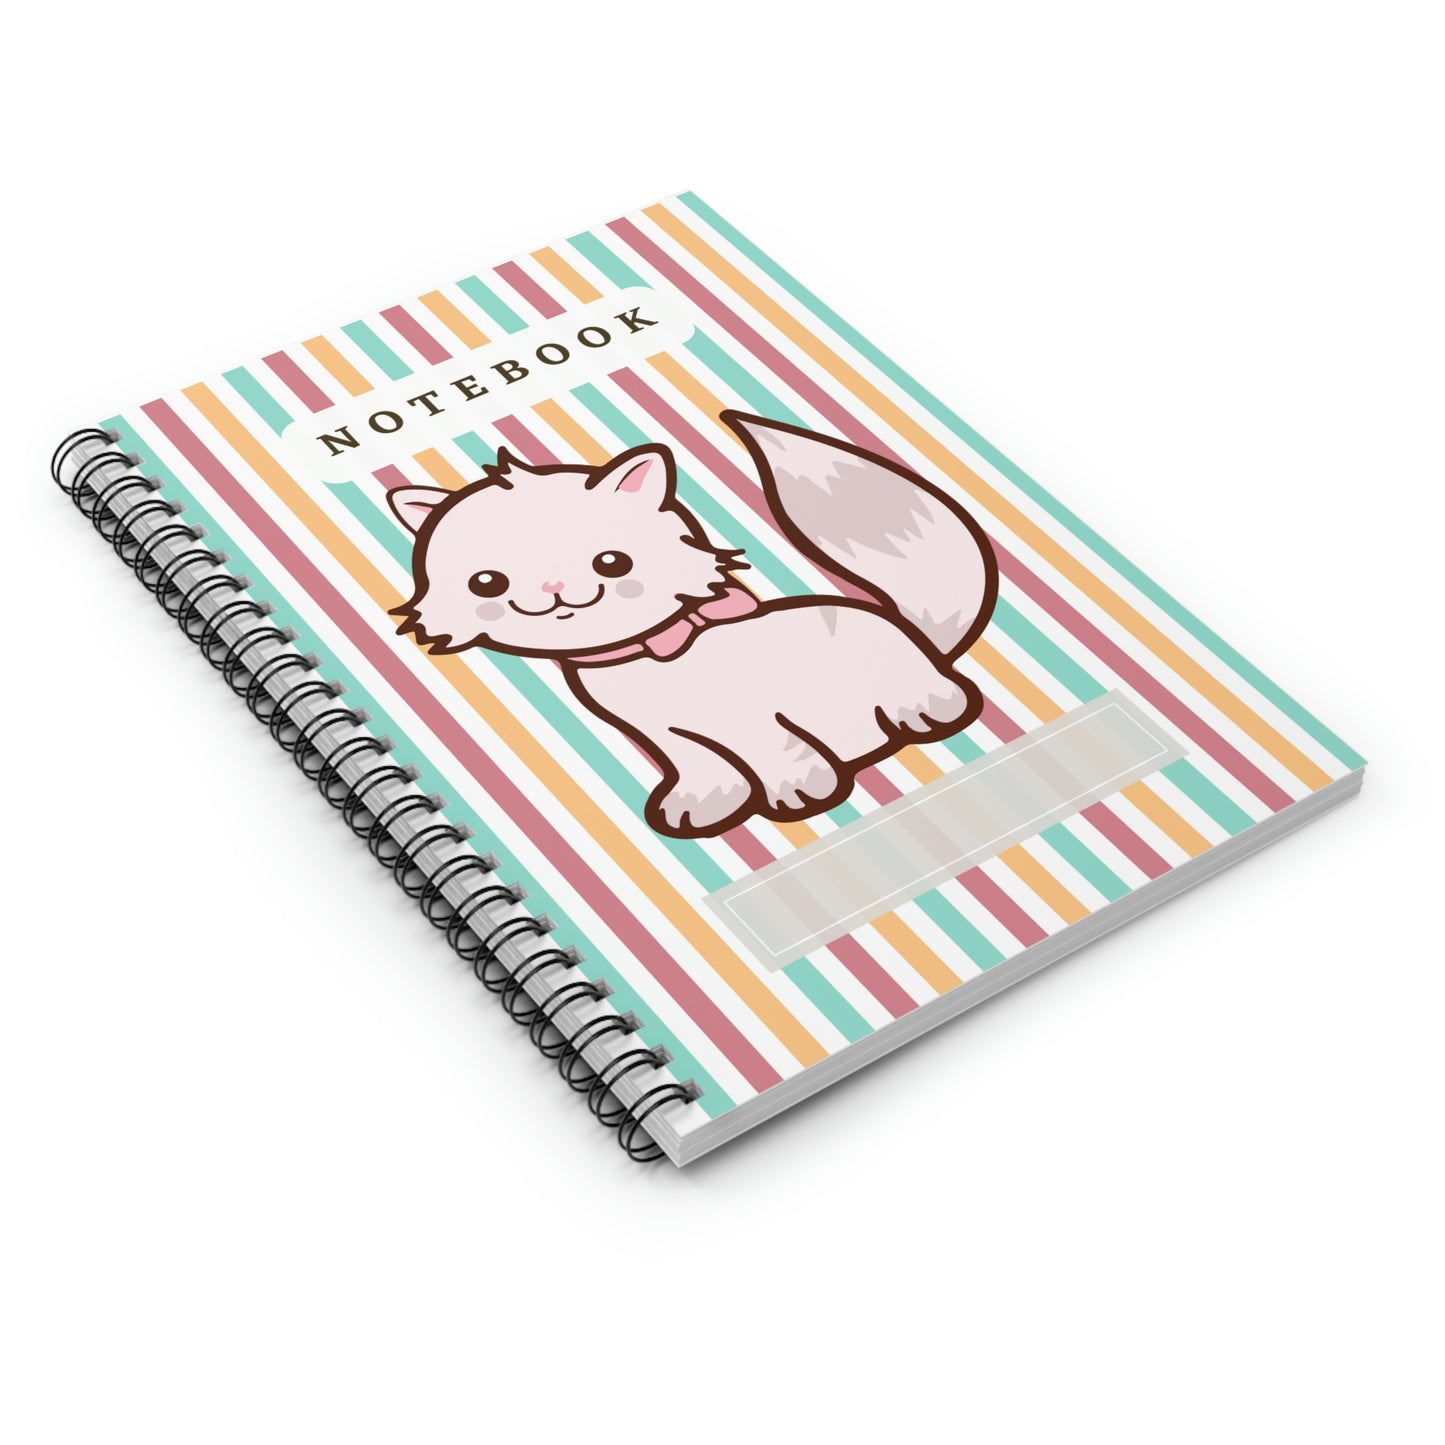 Big Kitten/Cat Stripe design Spiral Notebook - Ruled Line 118 pages